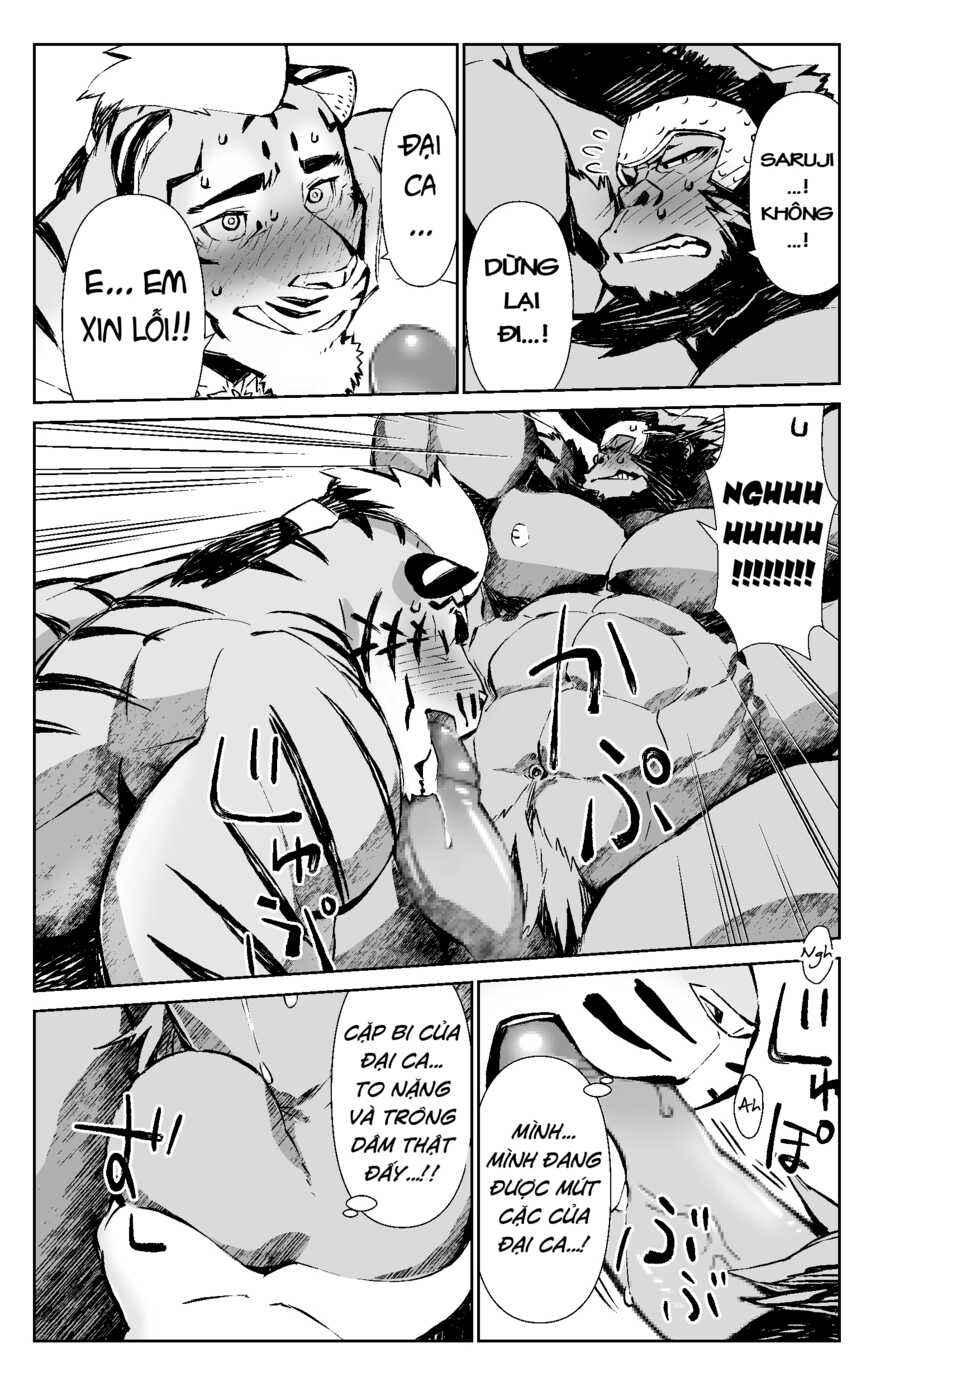 [Mennsuke] Manga Không Tên Của Mennsuke 1 - Hồi 2 - Page 19